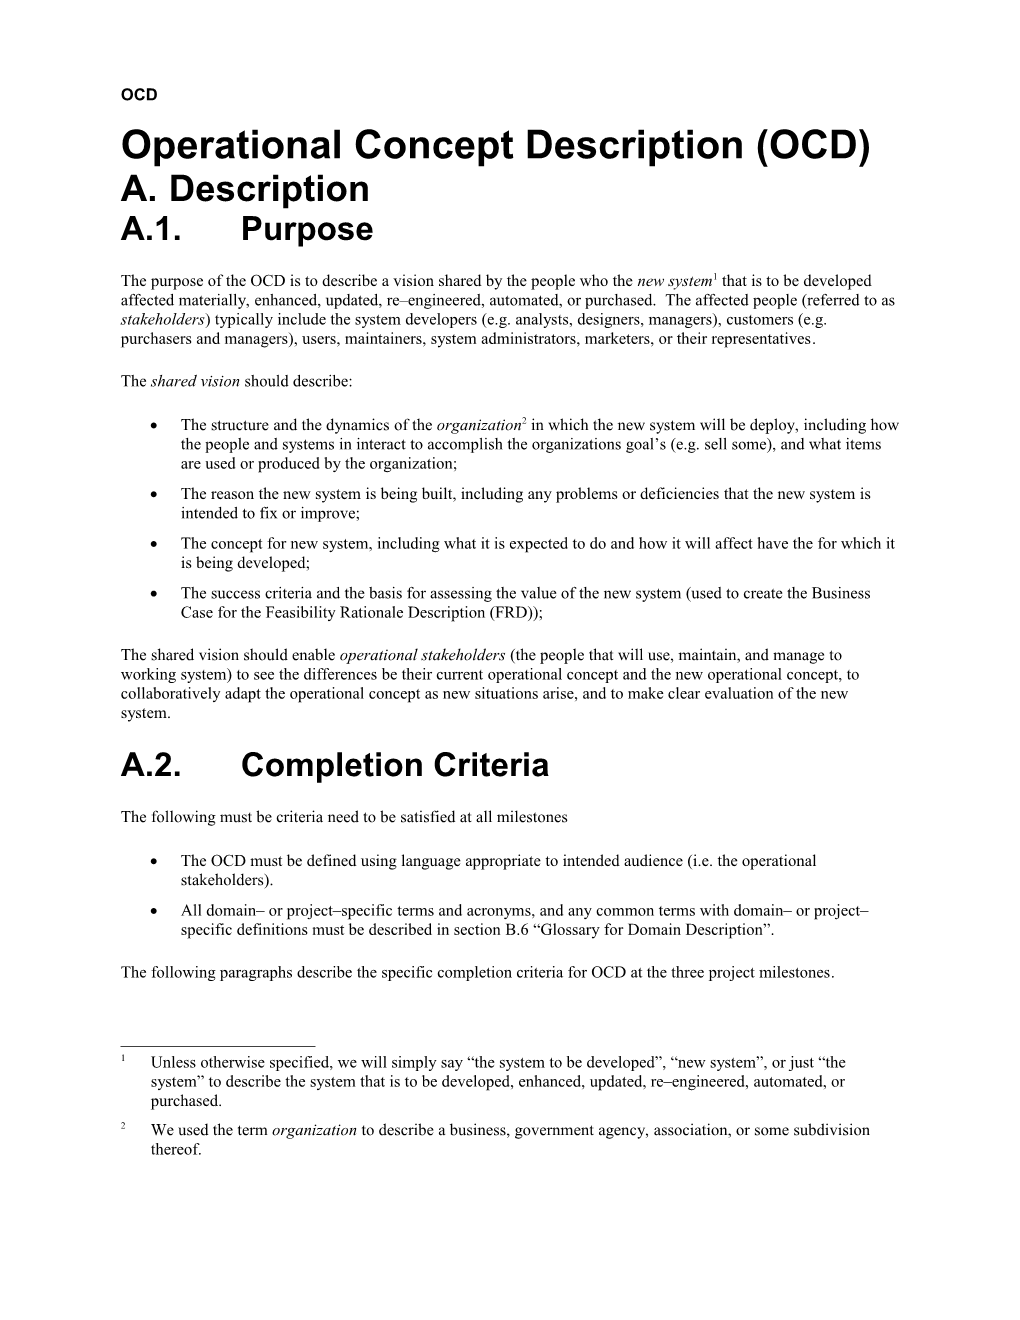 Guidelines for Mbaseoperational Concept Description (OCD)